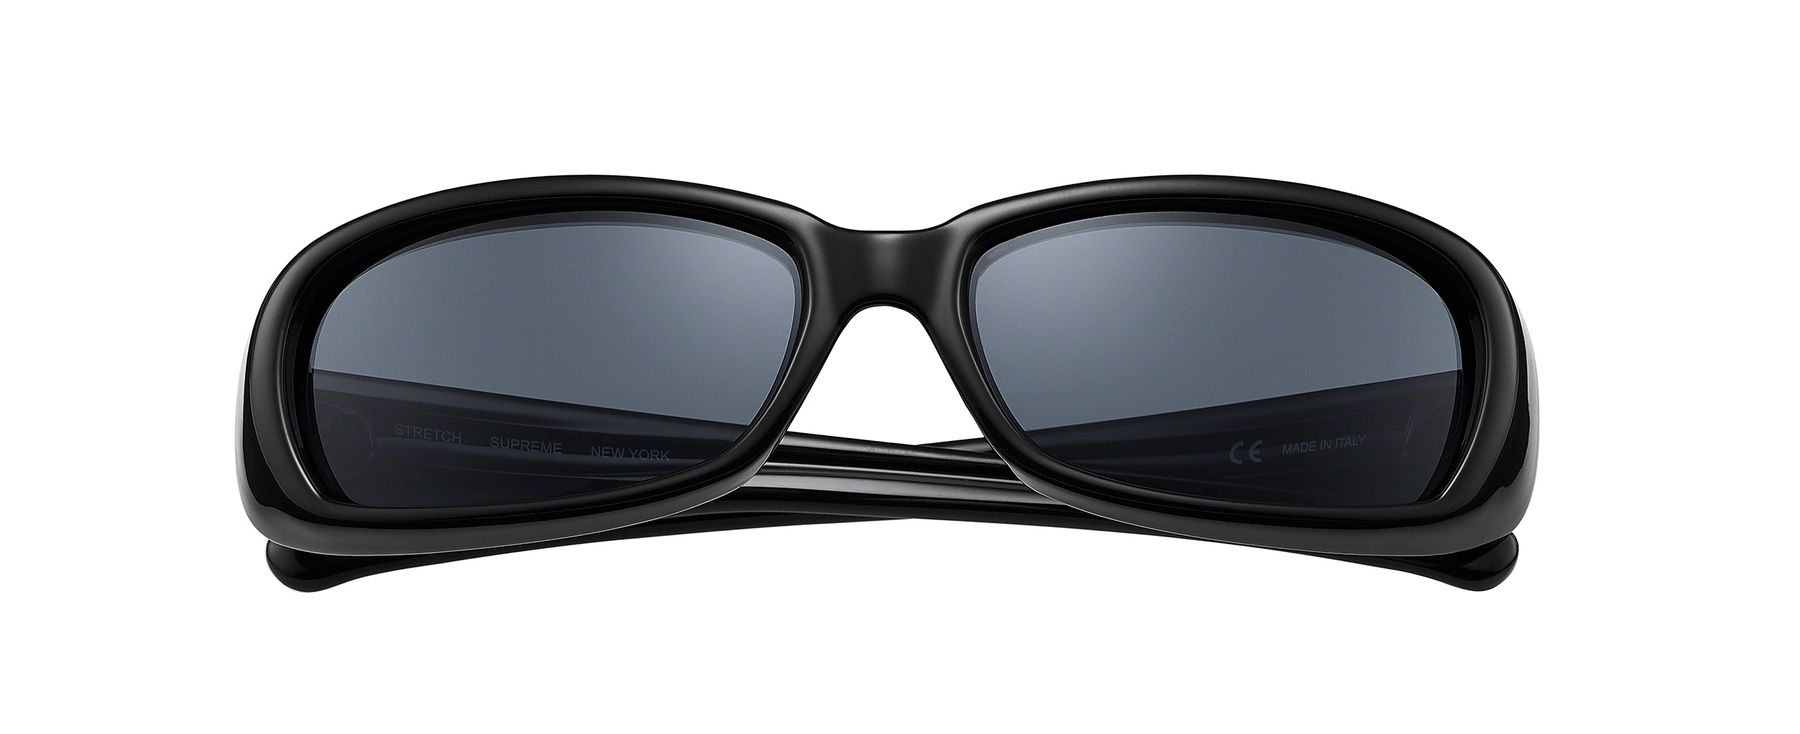 Supreme Spring Sunglasses – Supreme